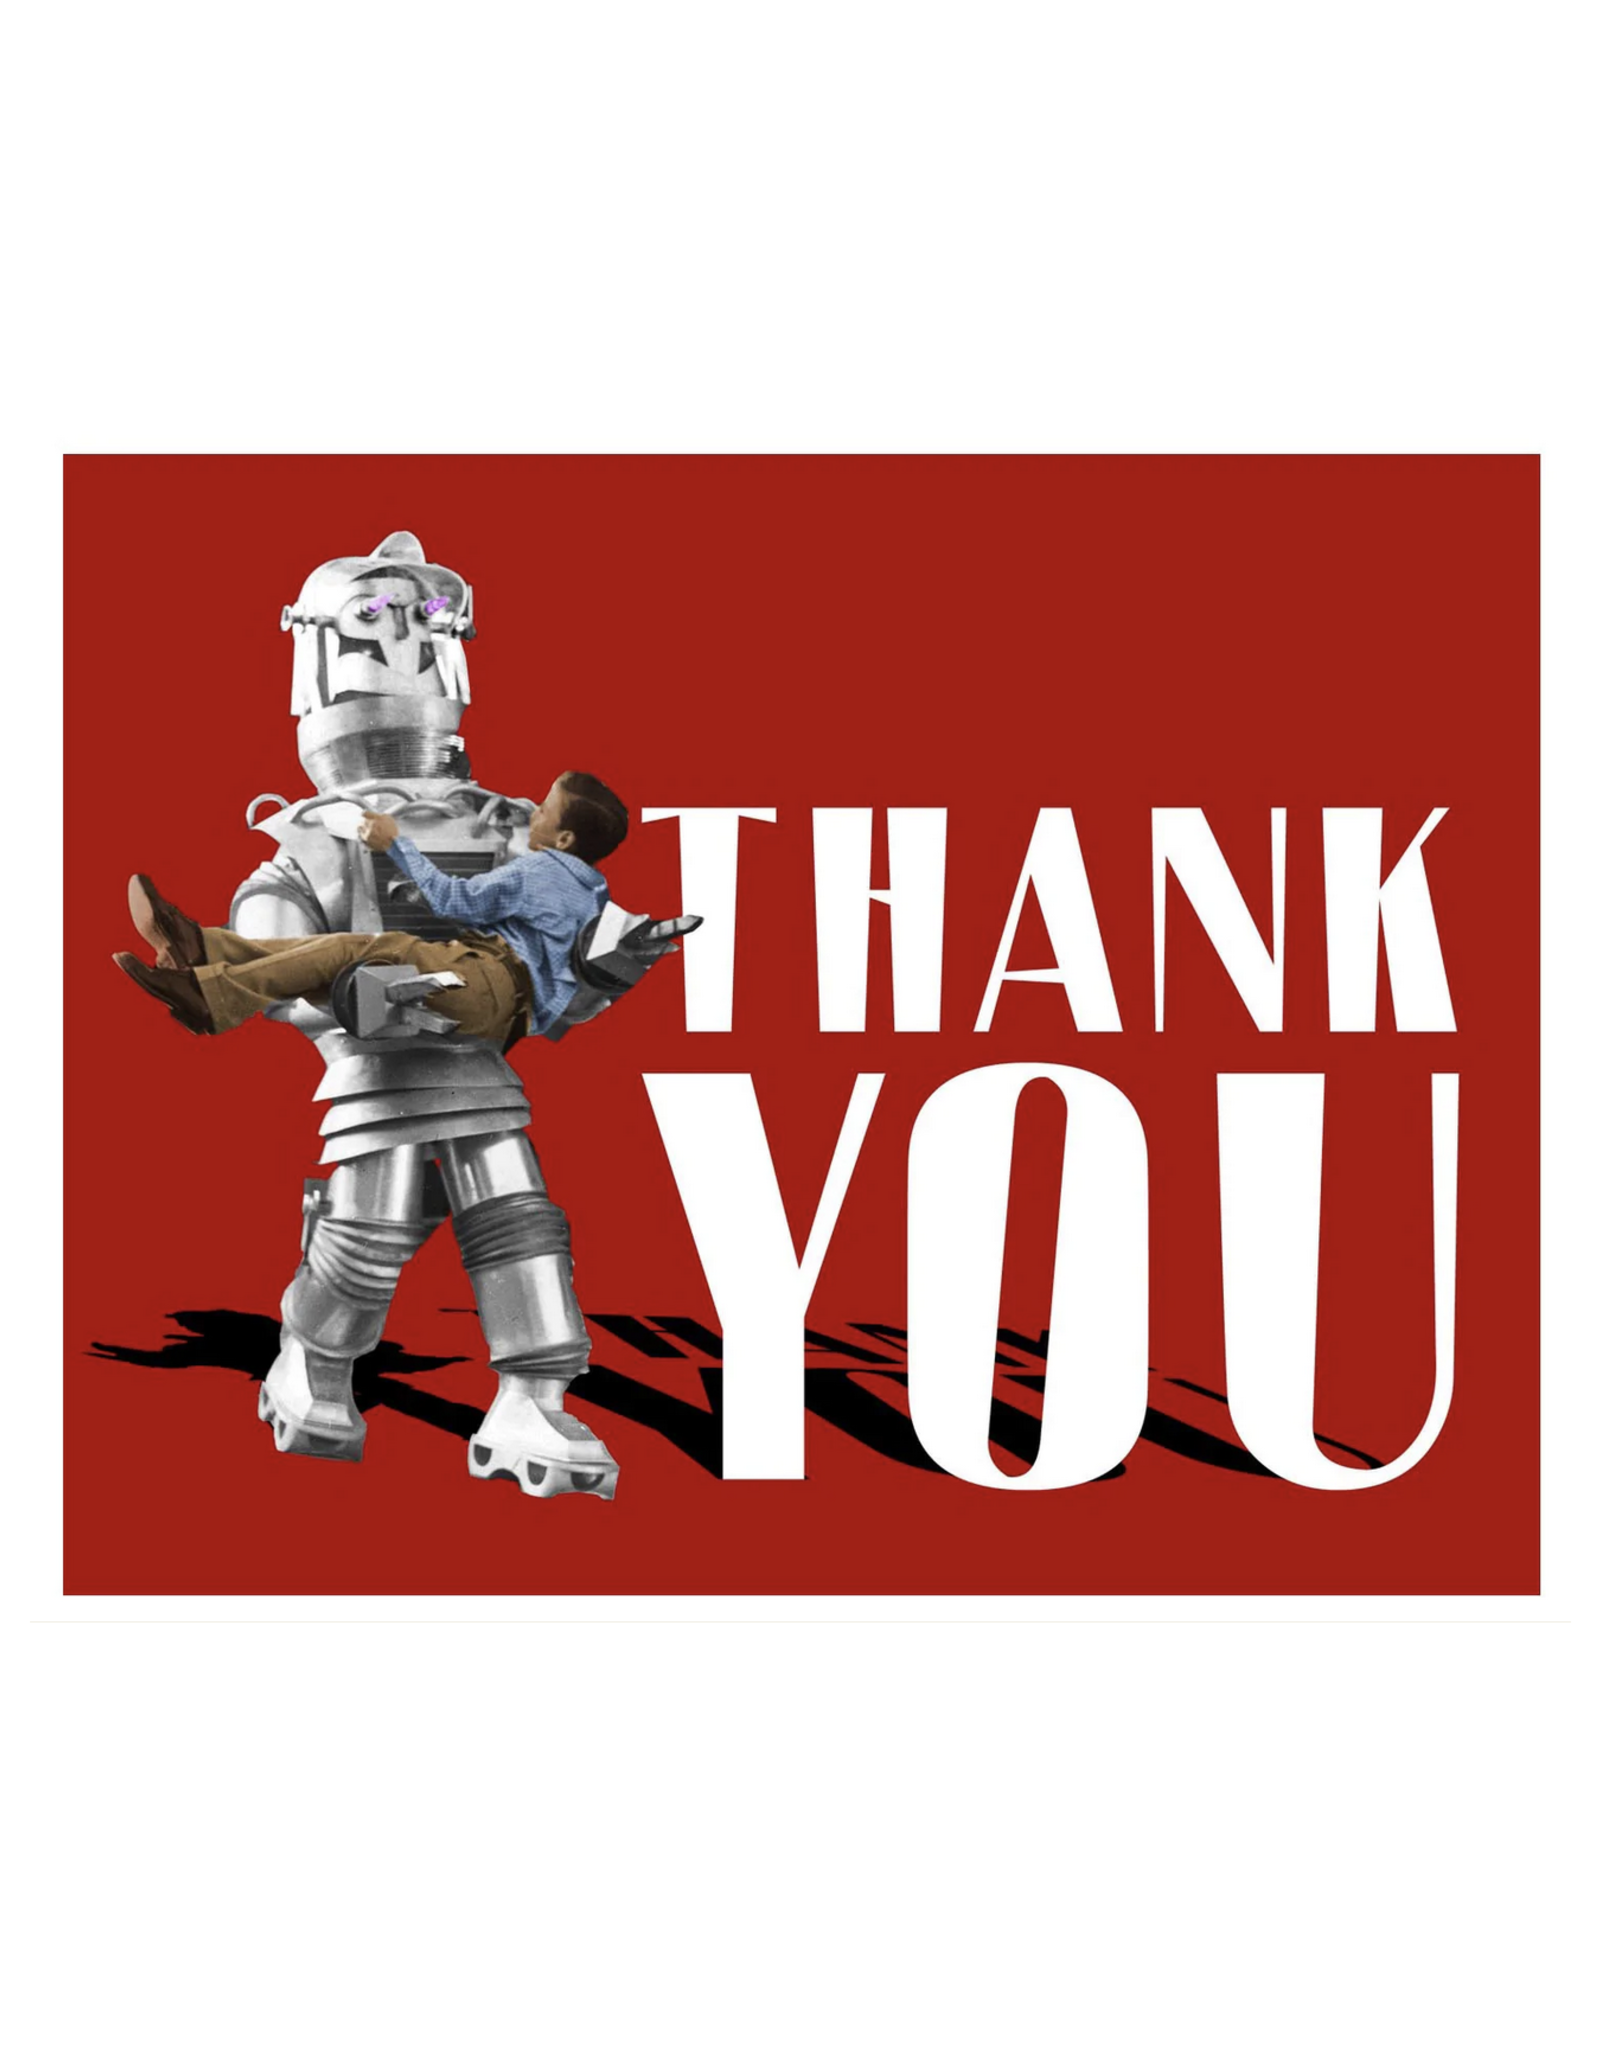 Thank You Robot Greeting Card